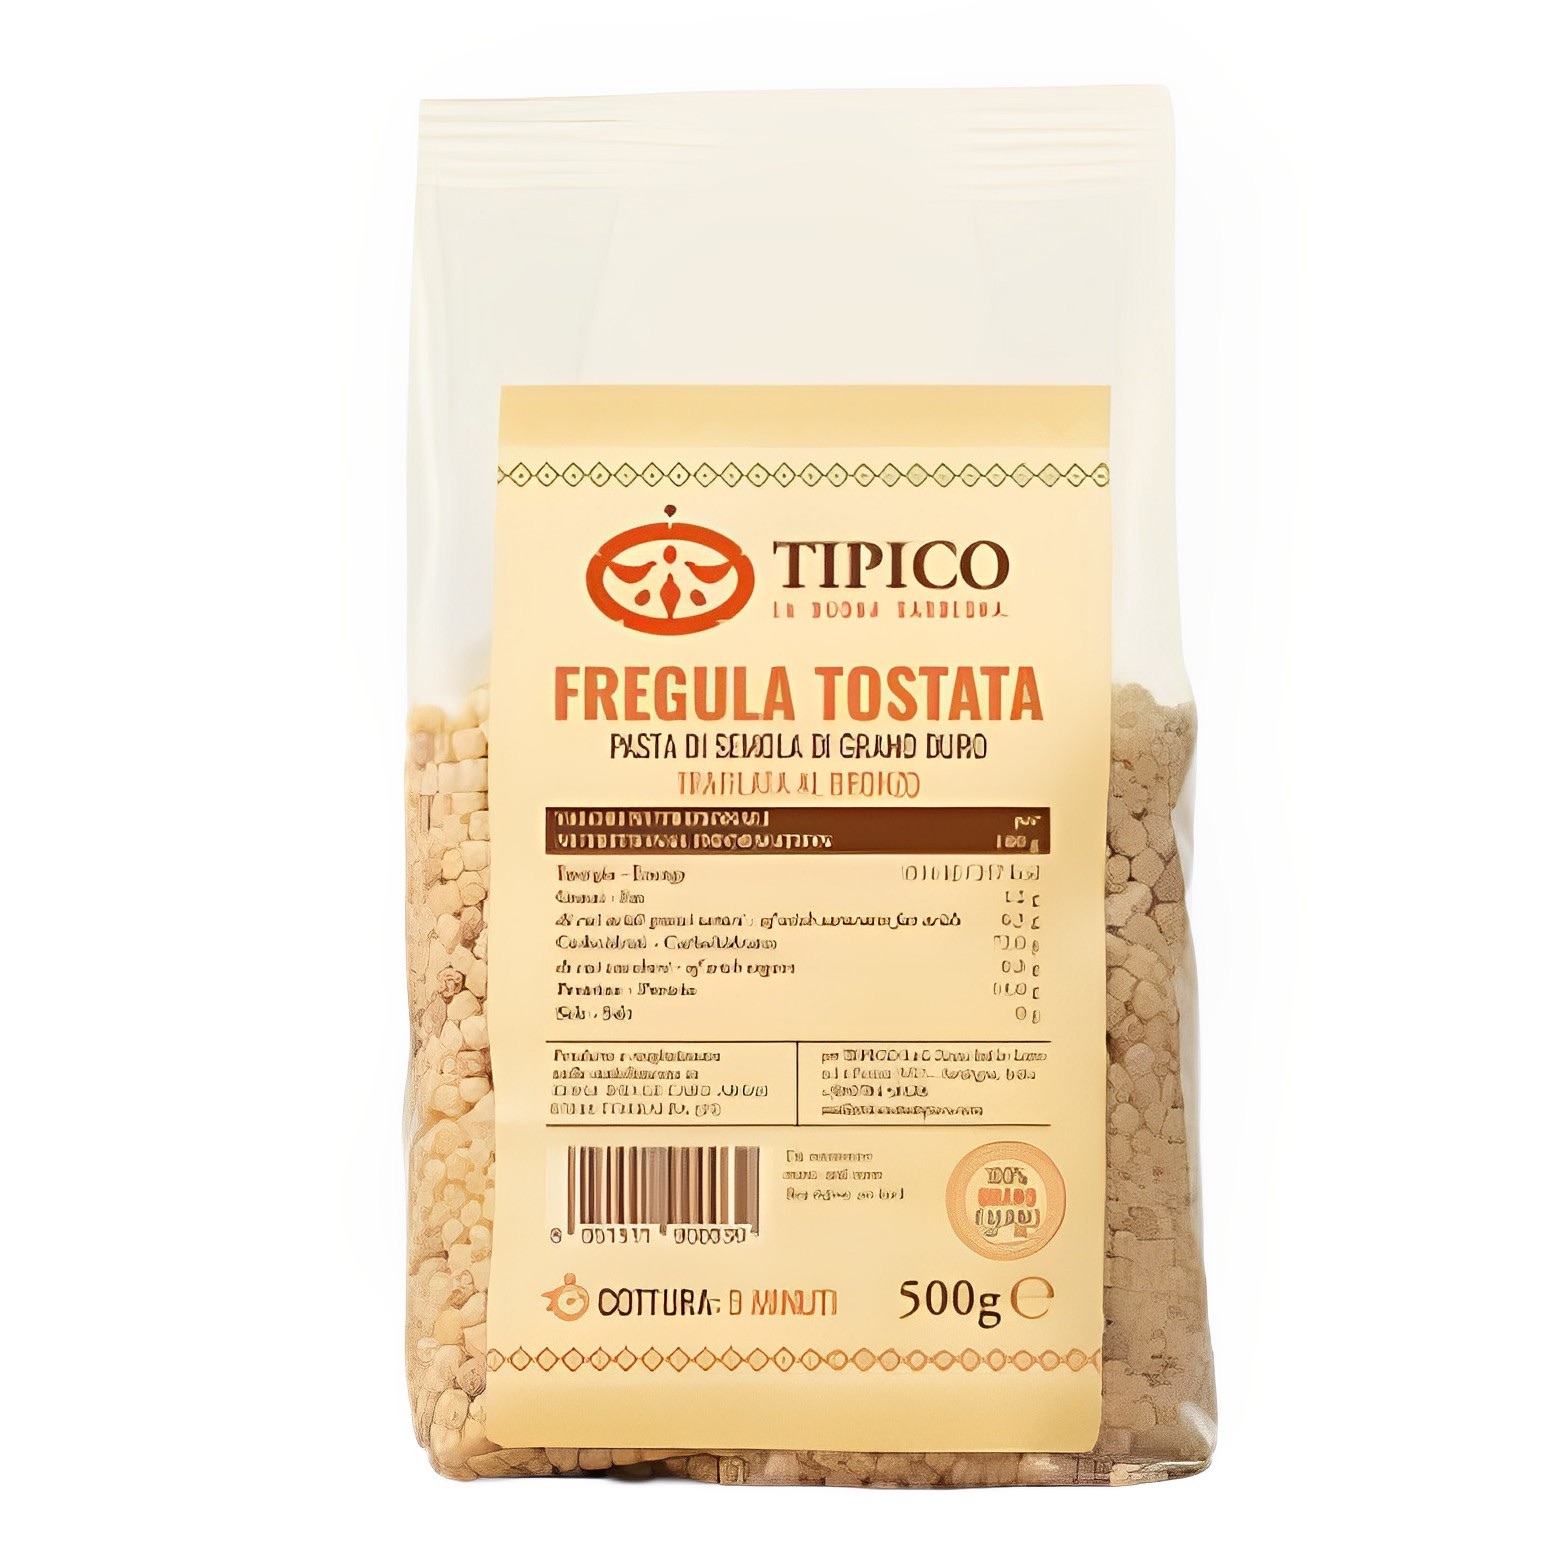 FREGULA TOSTATA – Sardische Pasta geröstet, 500g